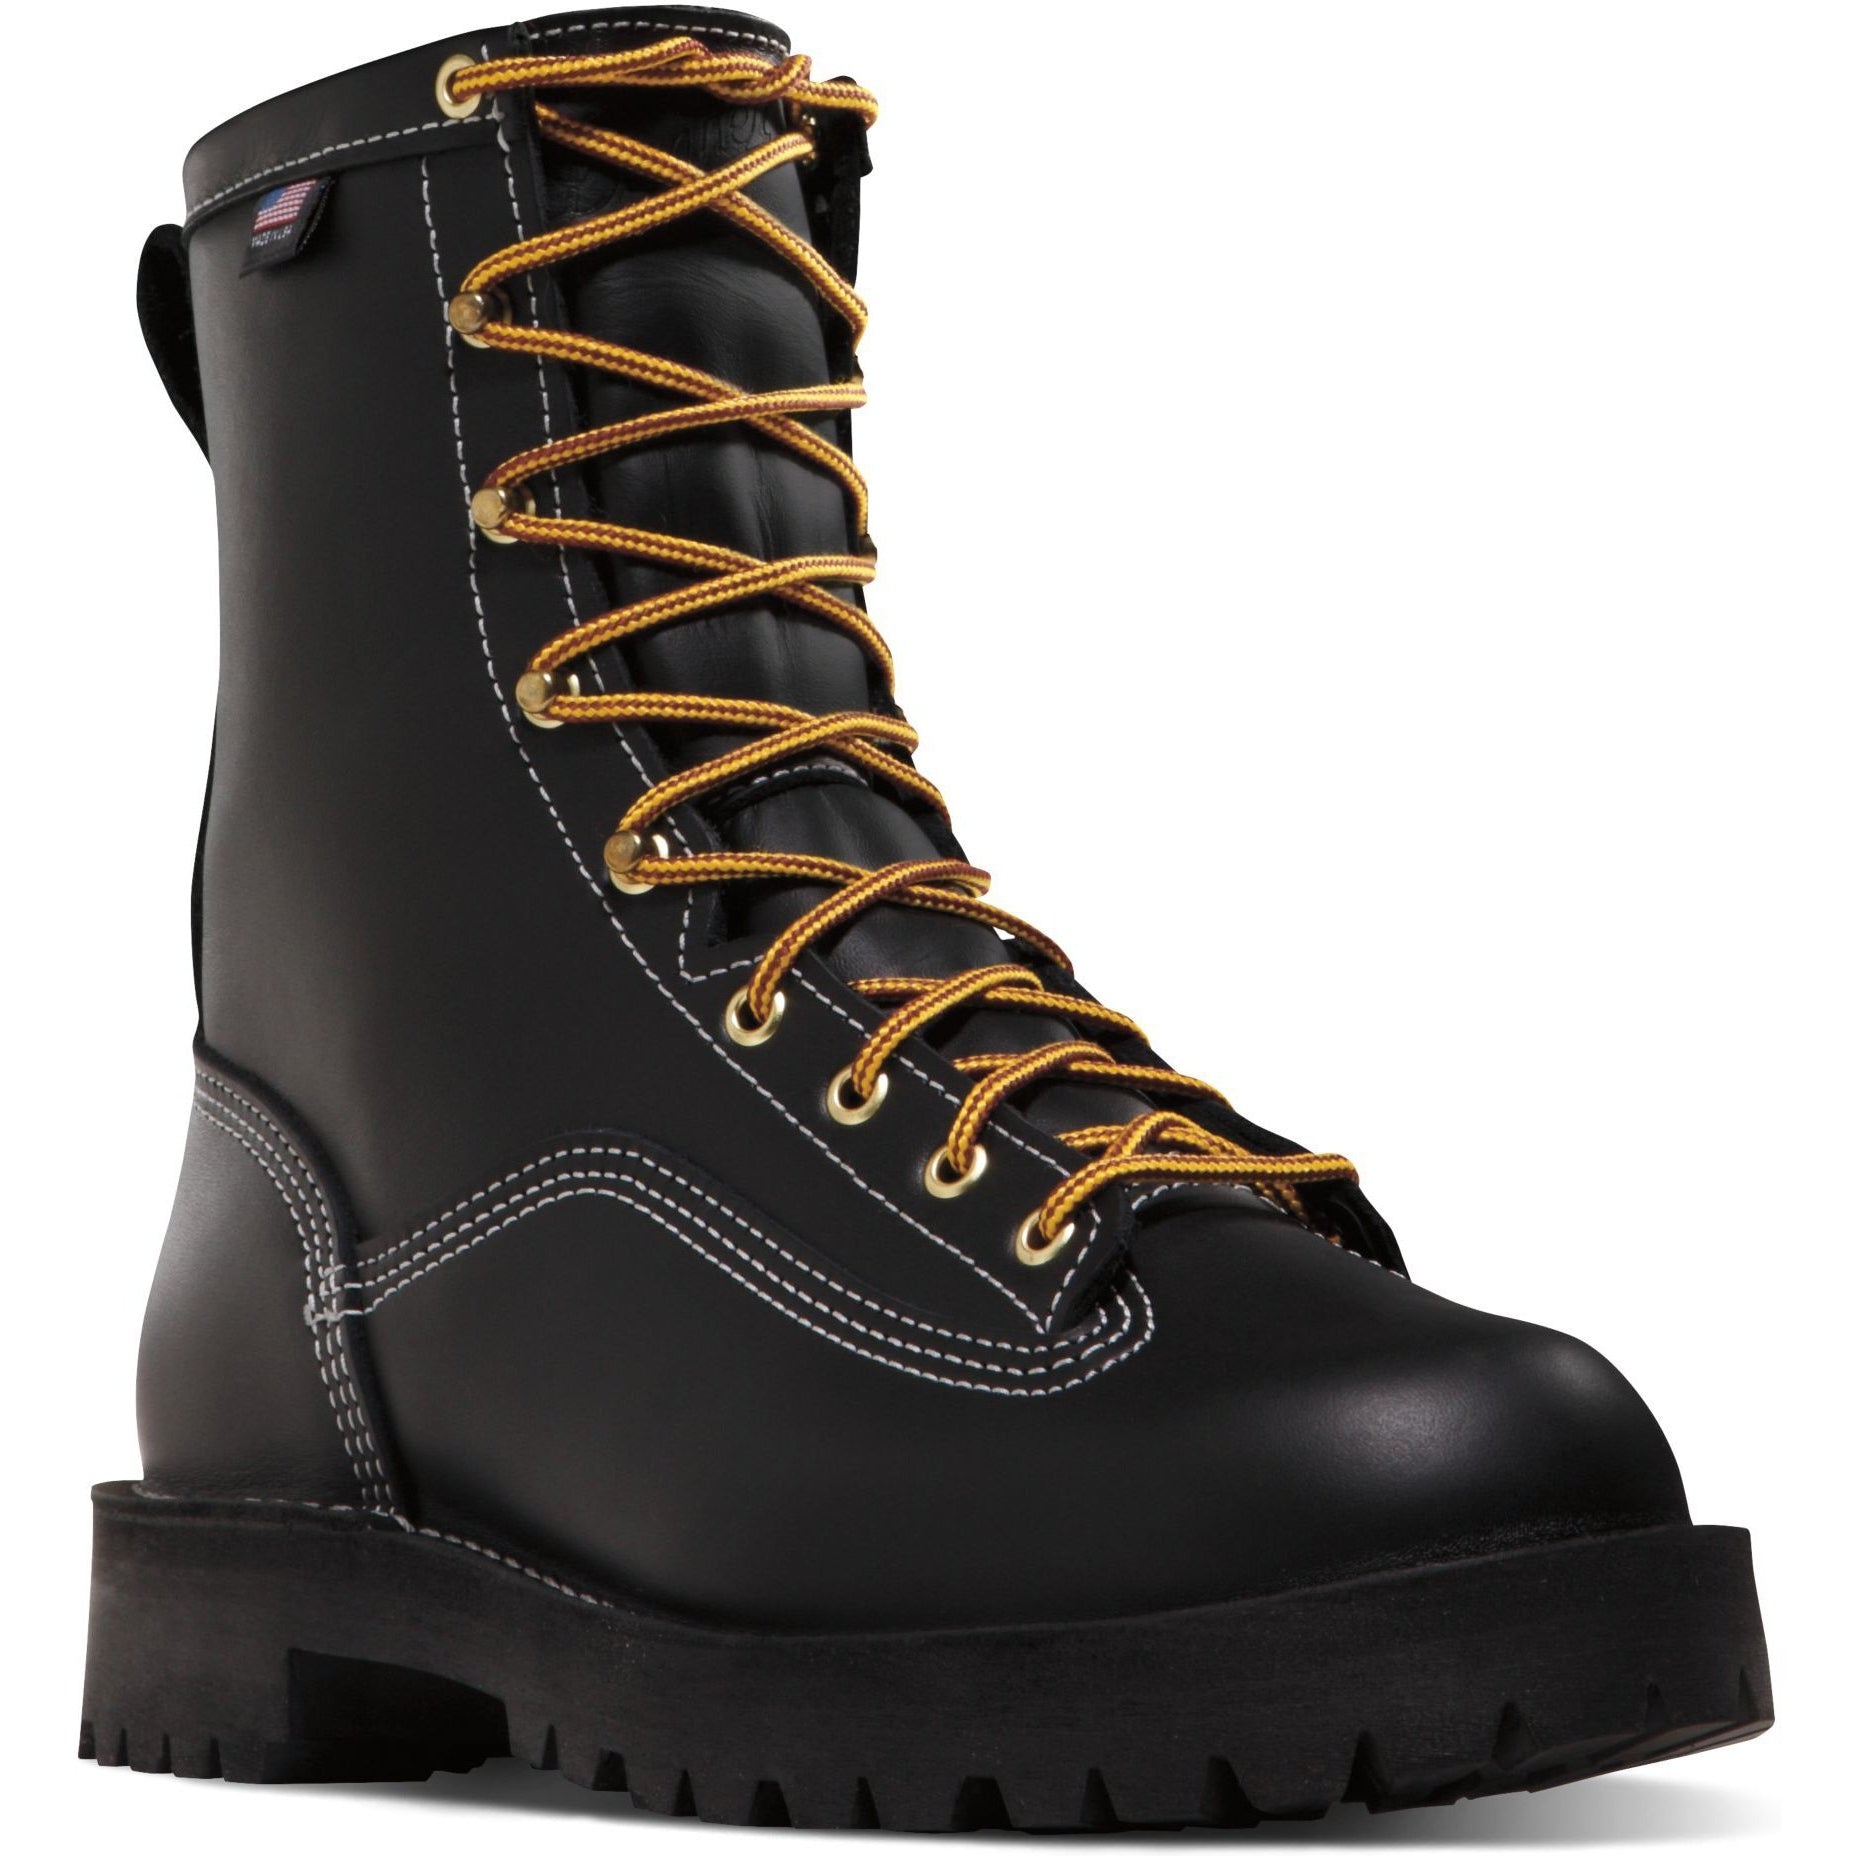 Danner Men's Rain Forest USA Made 8" Soft Toe WP Work Boot Black 11500 7 / Medium / Black - Overlook Boots